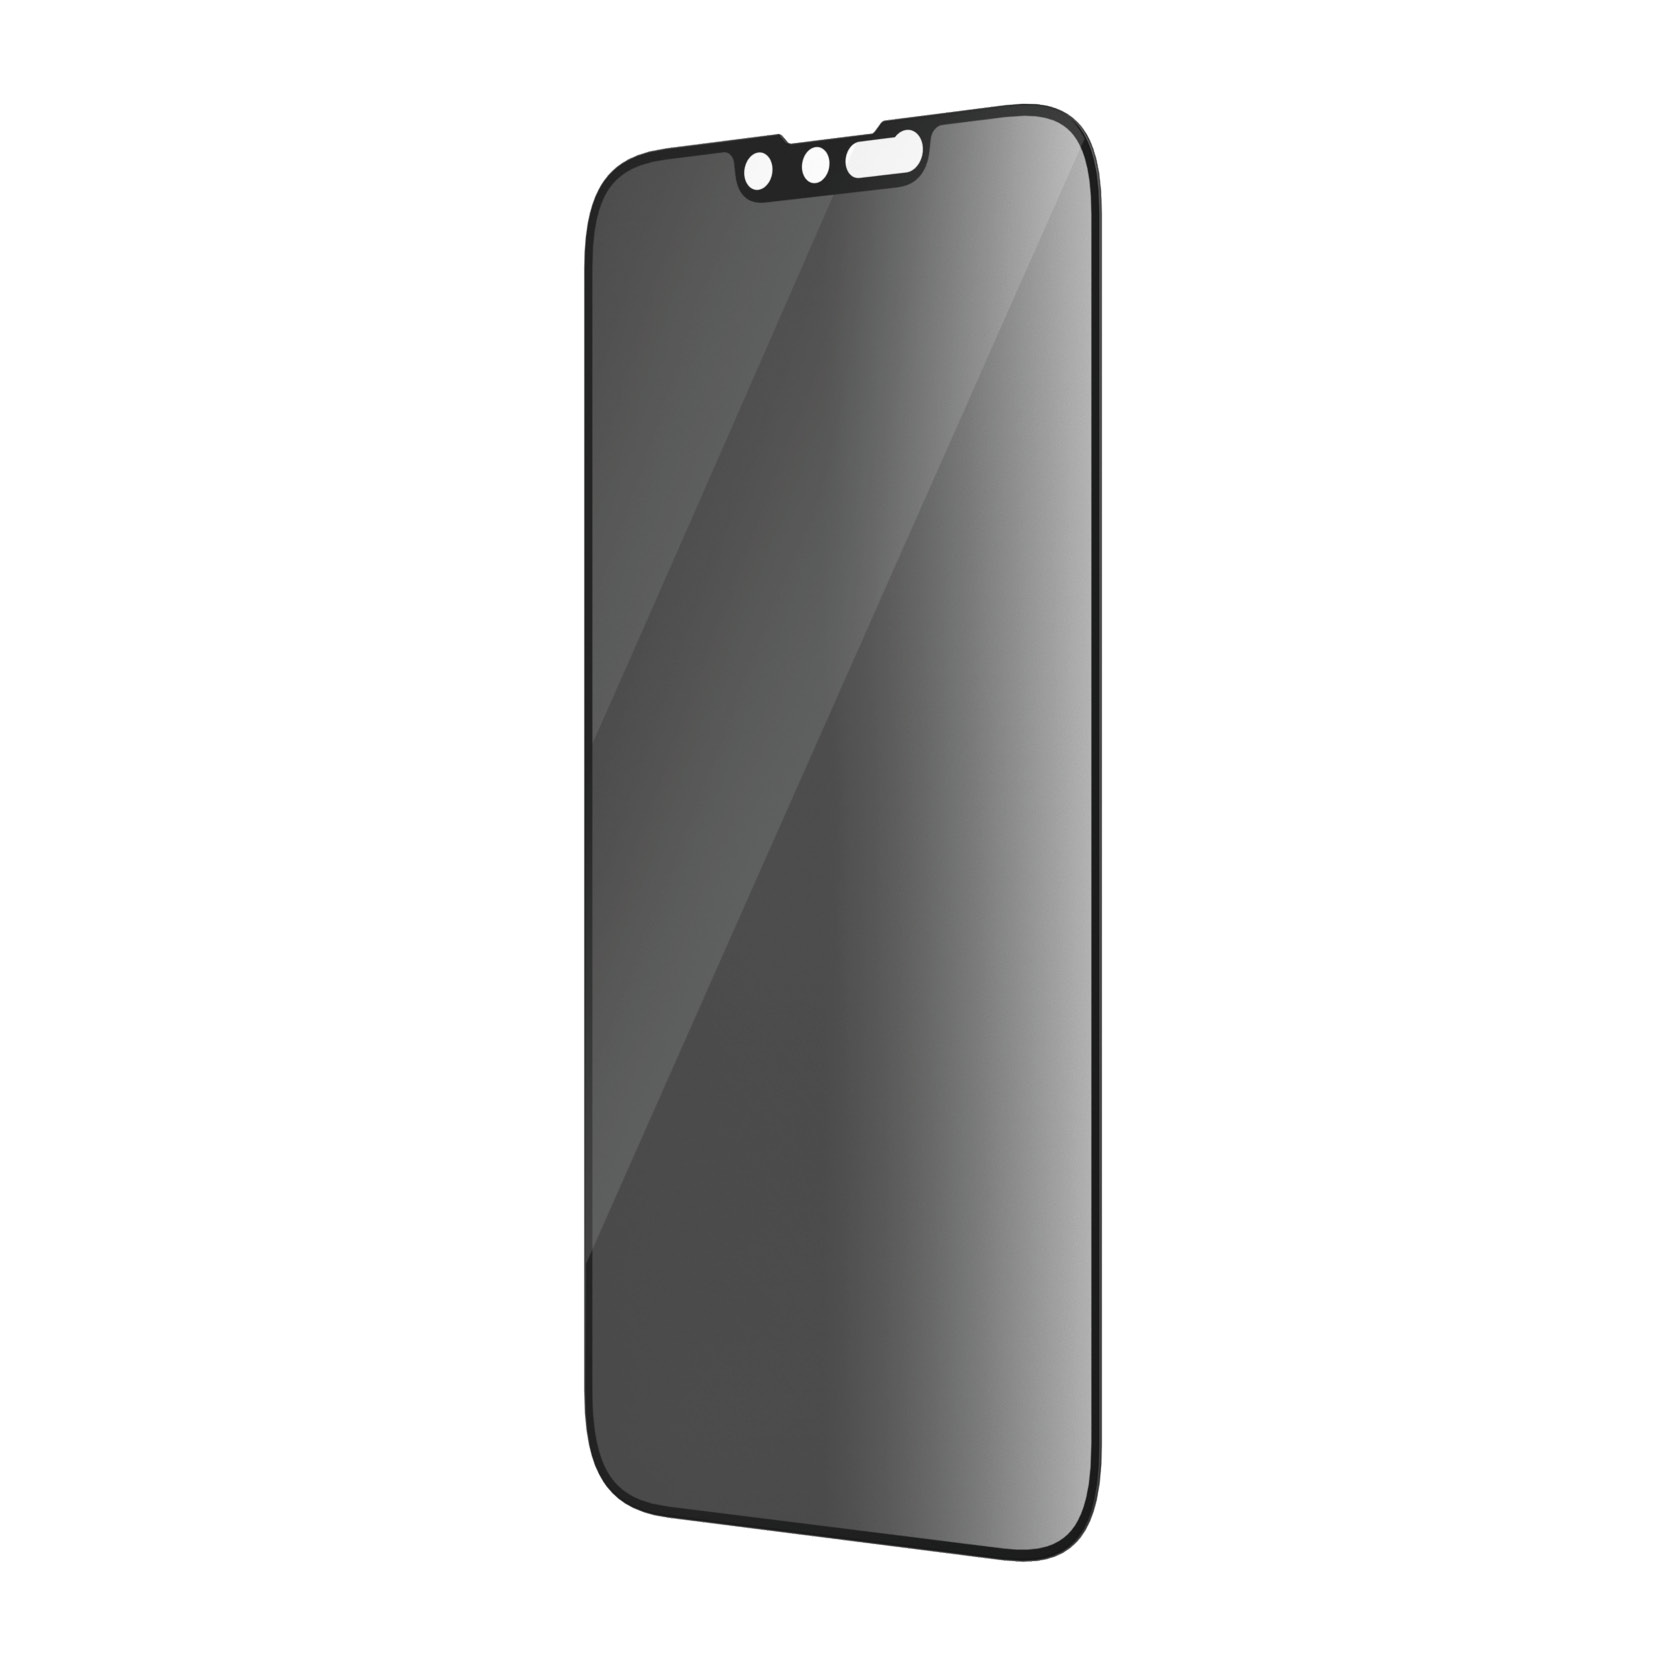 Protector de ecran de privacy PanzerGlass Apple iPhone 14 | 13 | 13 Pro | Potrivire ultra-larga cu. EasyAligner thumb